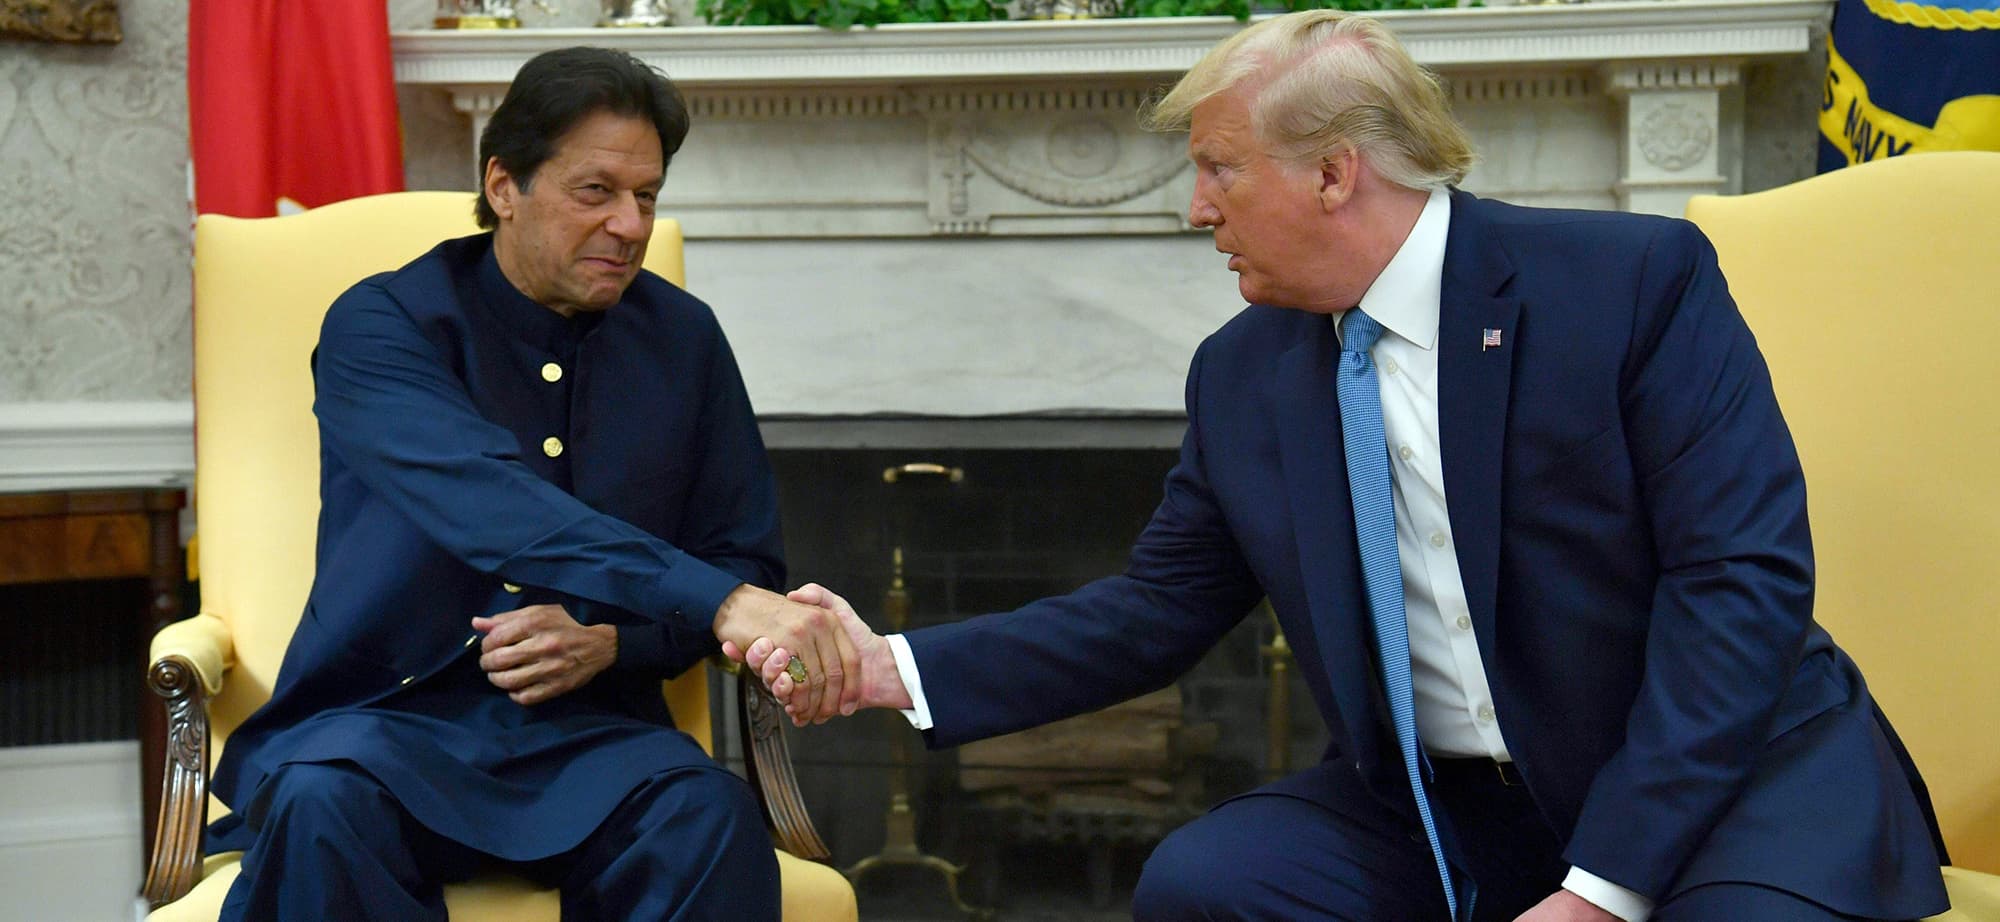 PM Imran Khan with President Trump